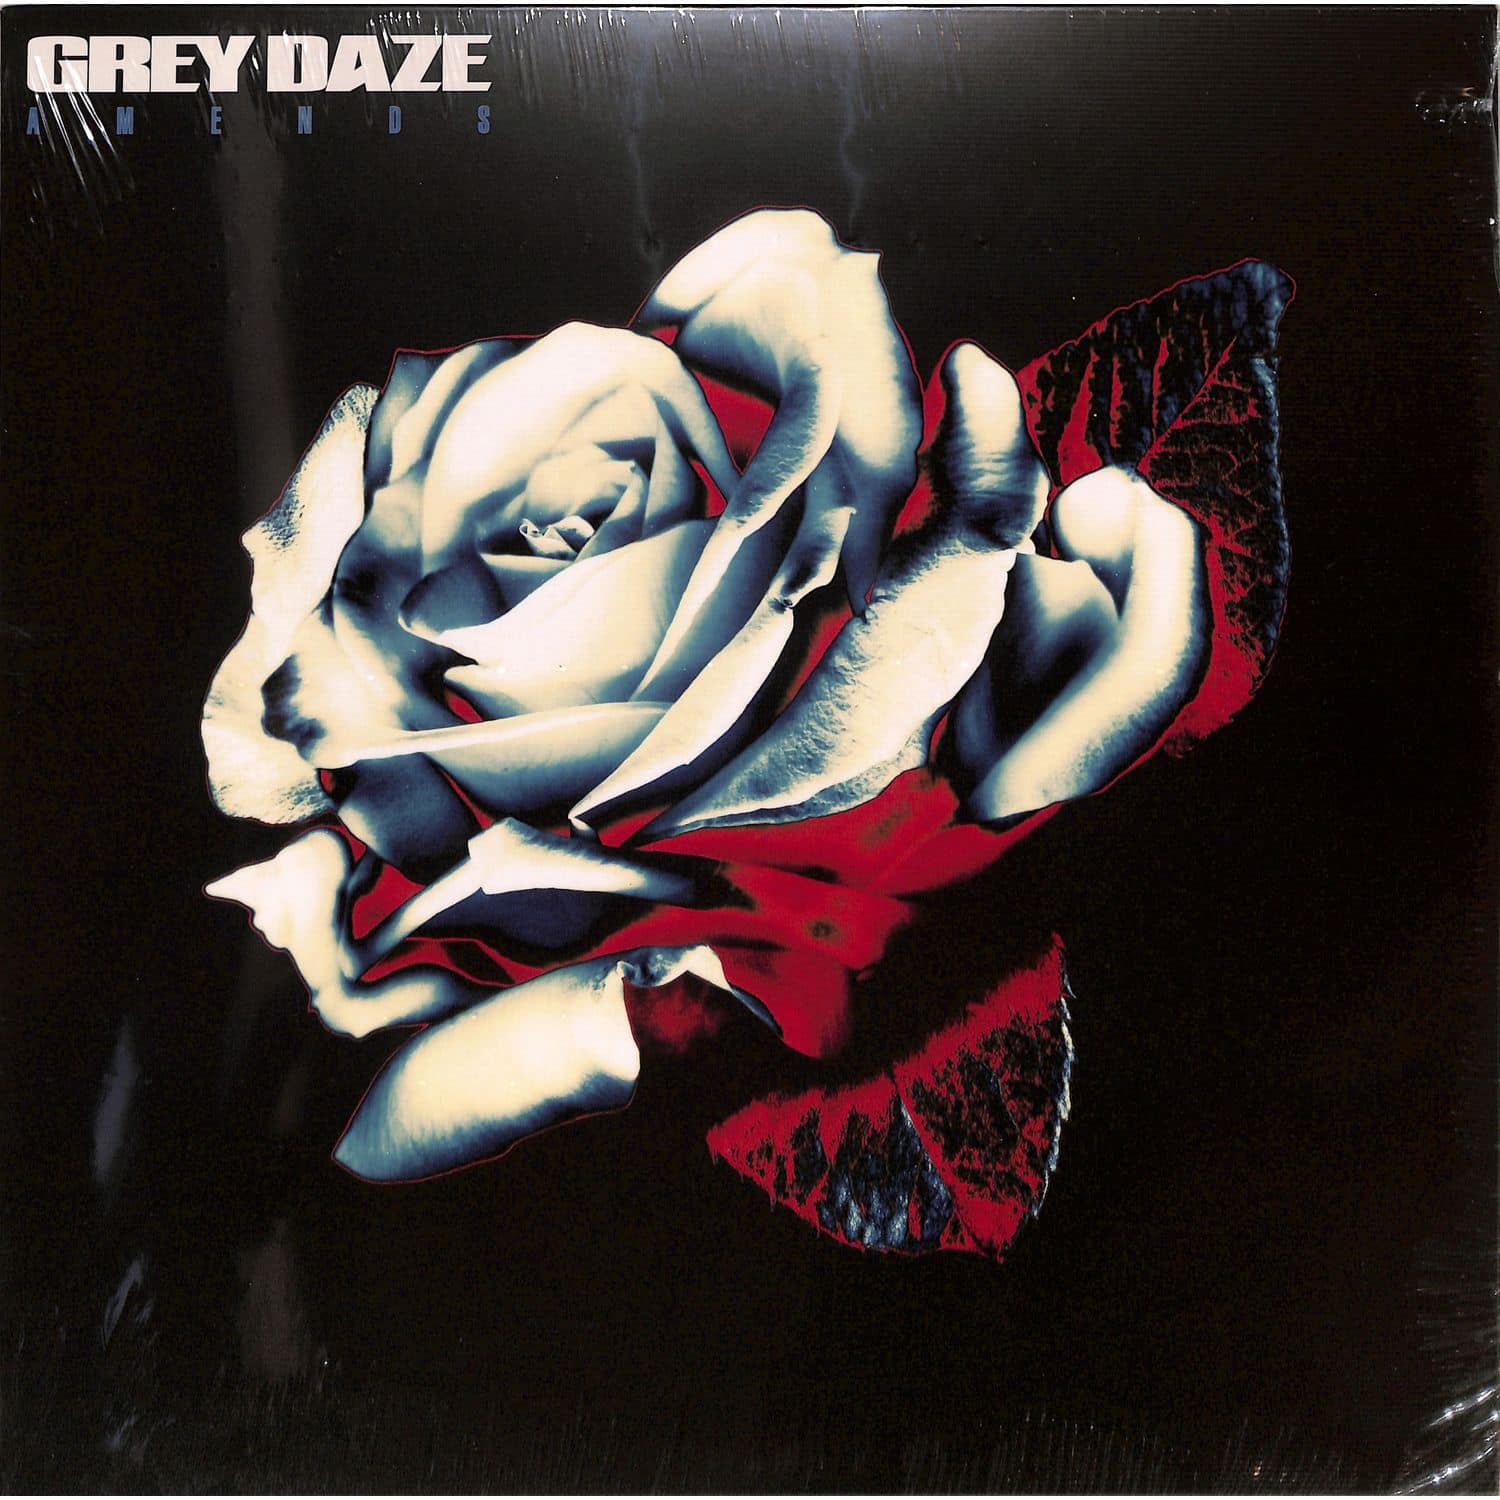 Grey Daze - AMENDS 